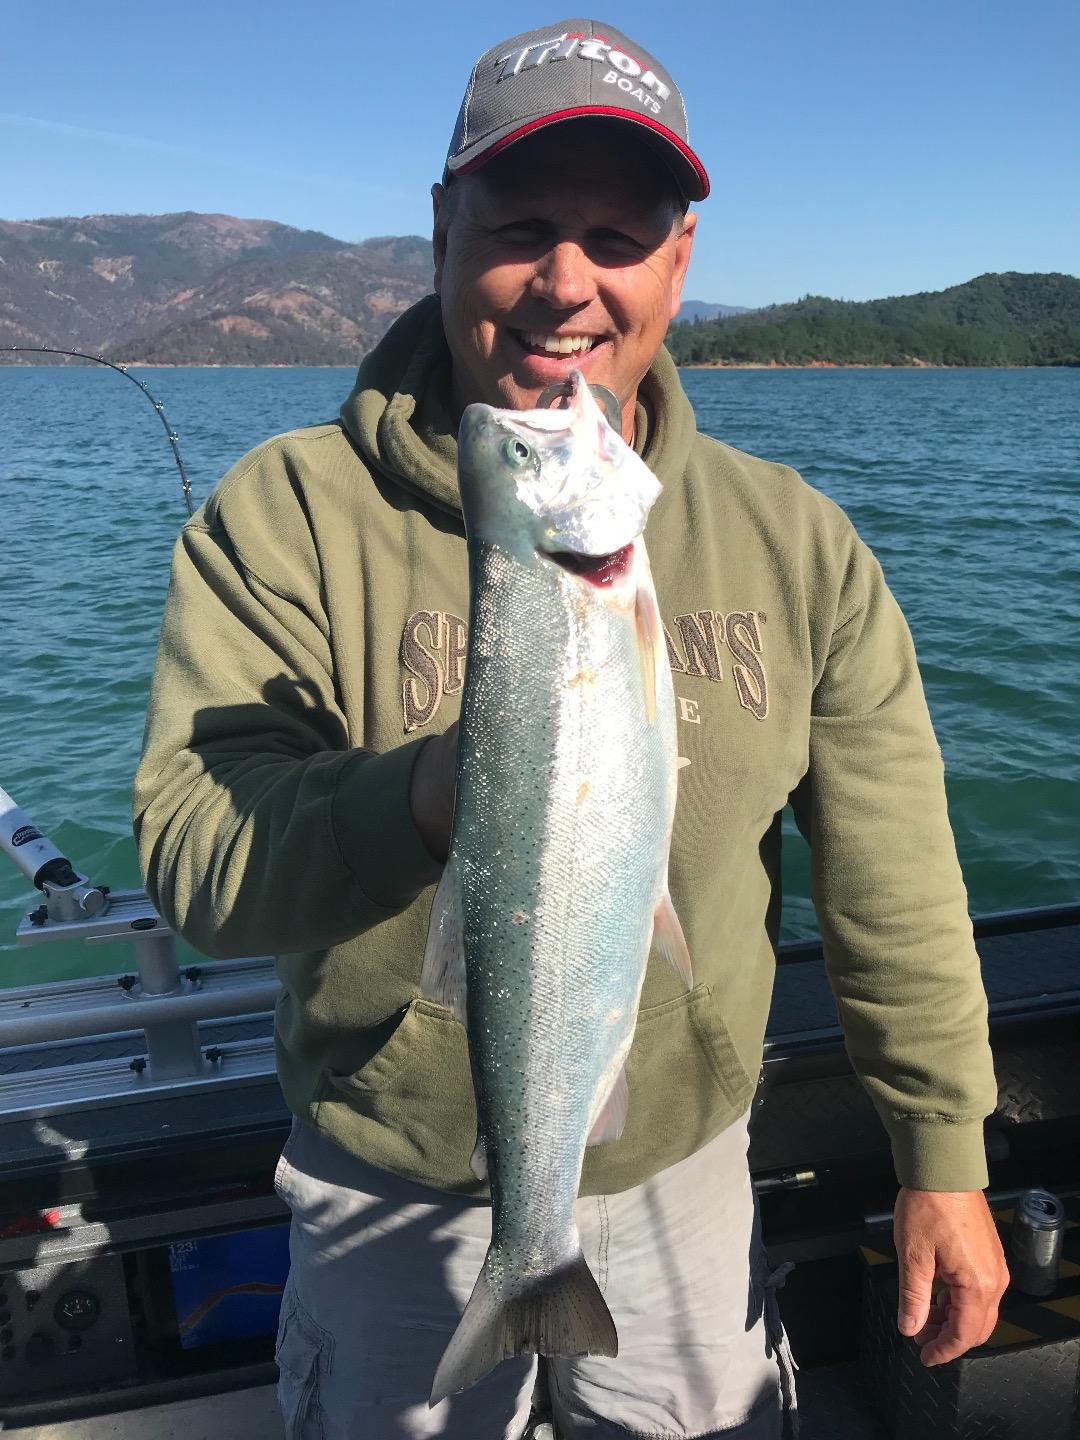 Shasta lake trout bite building!